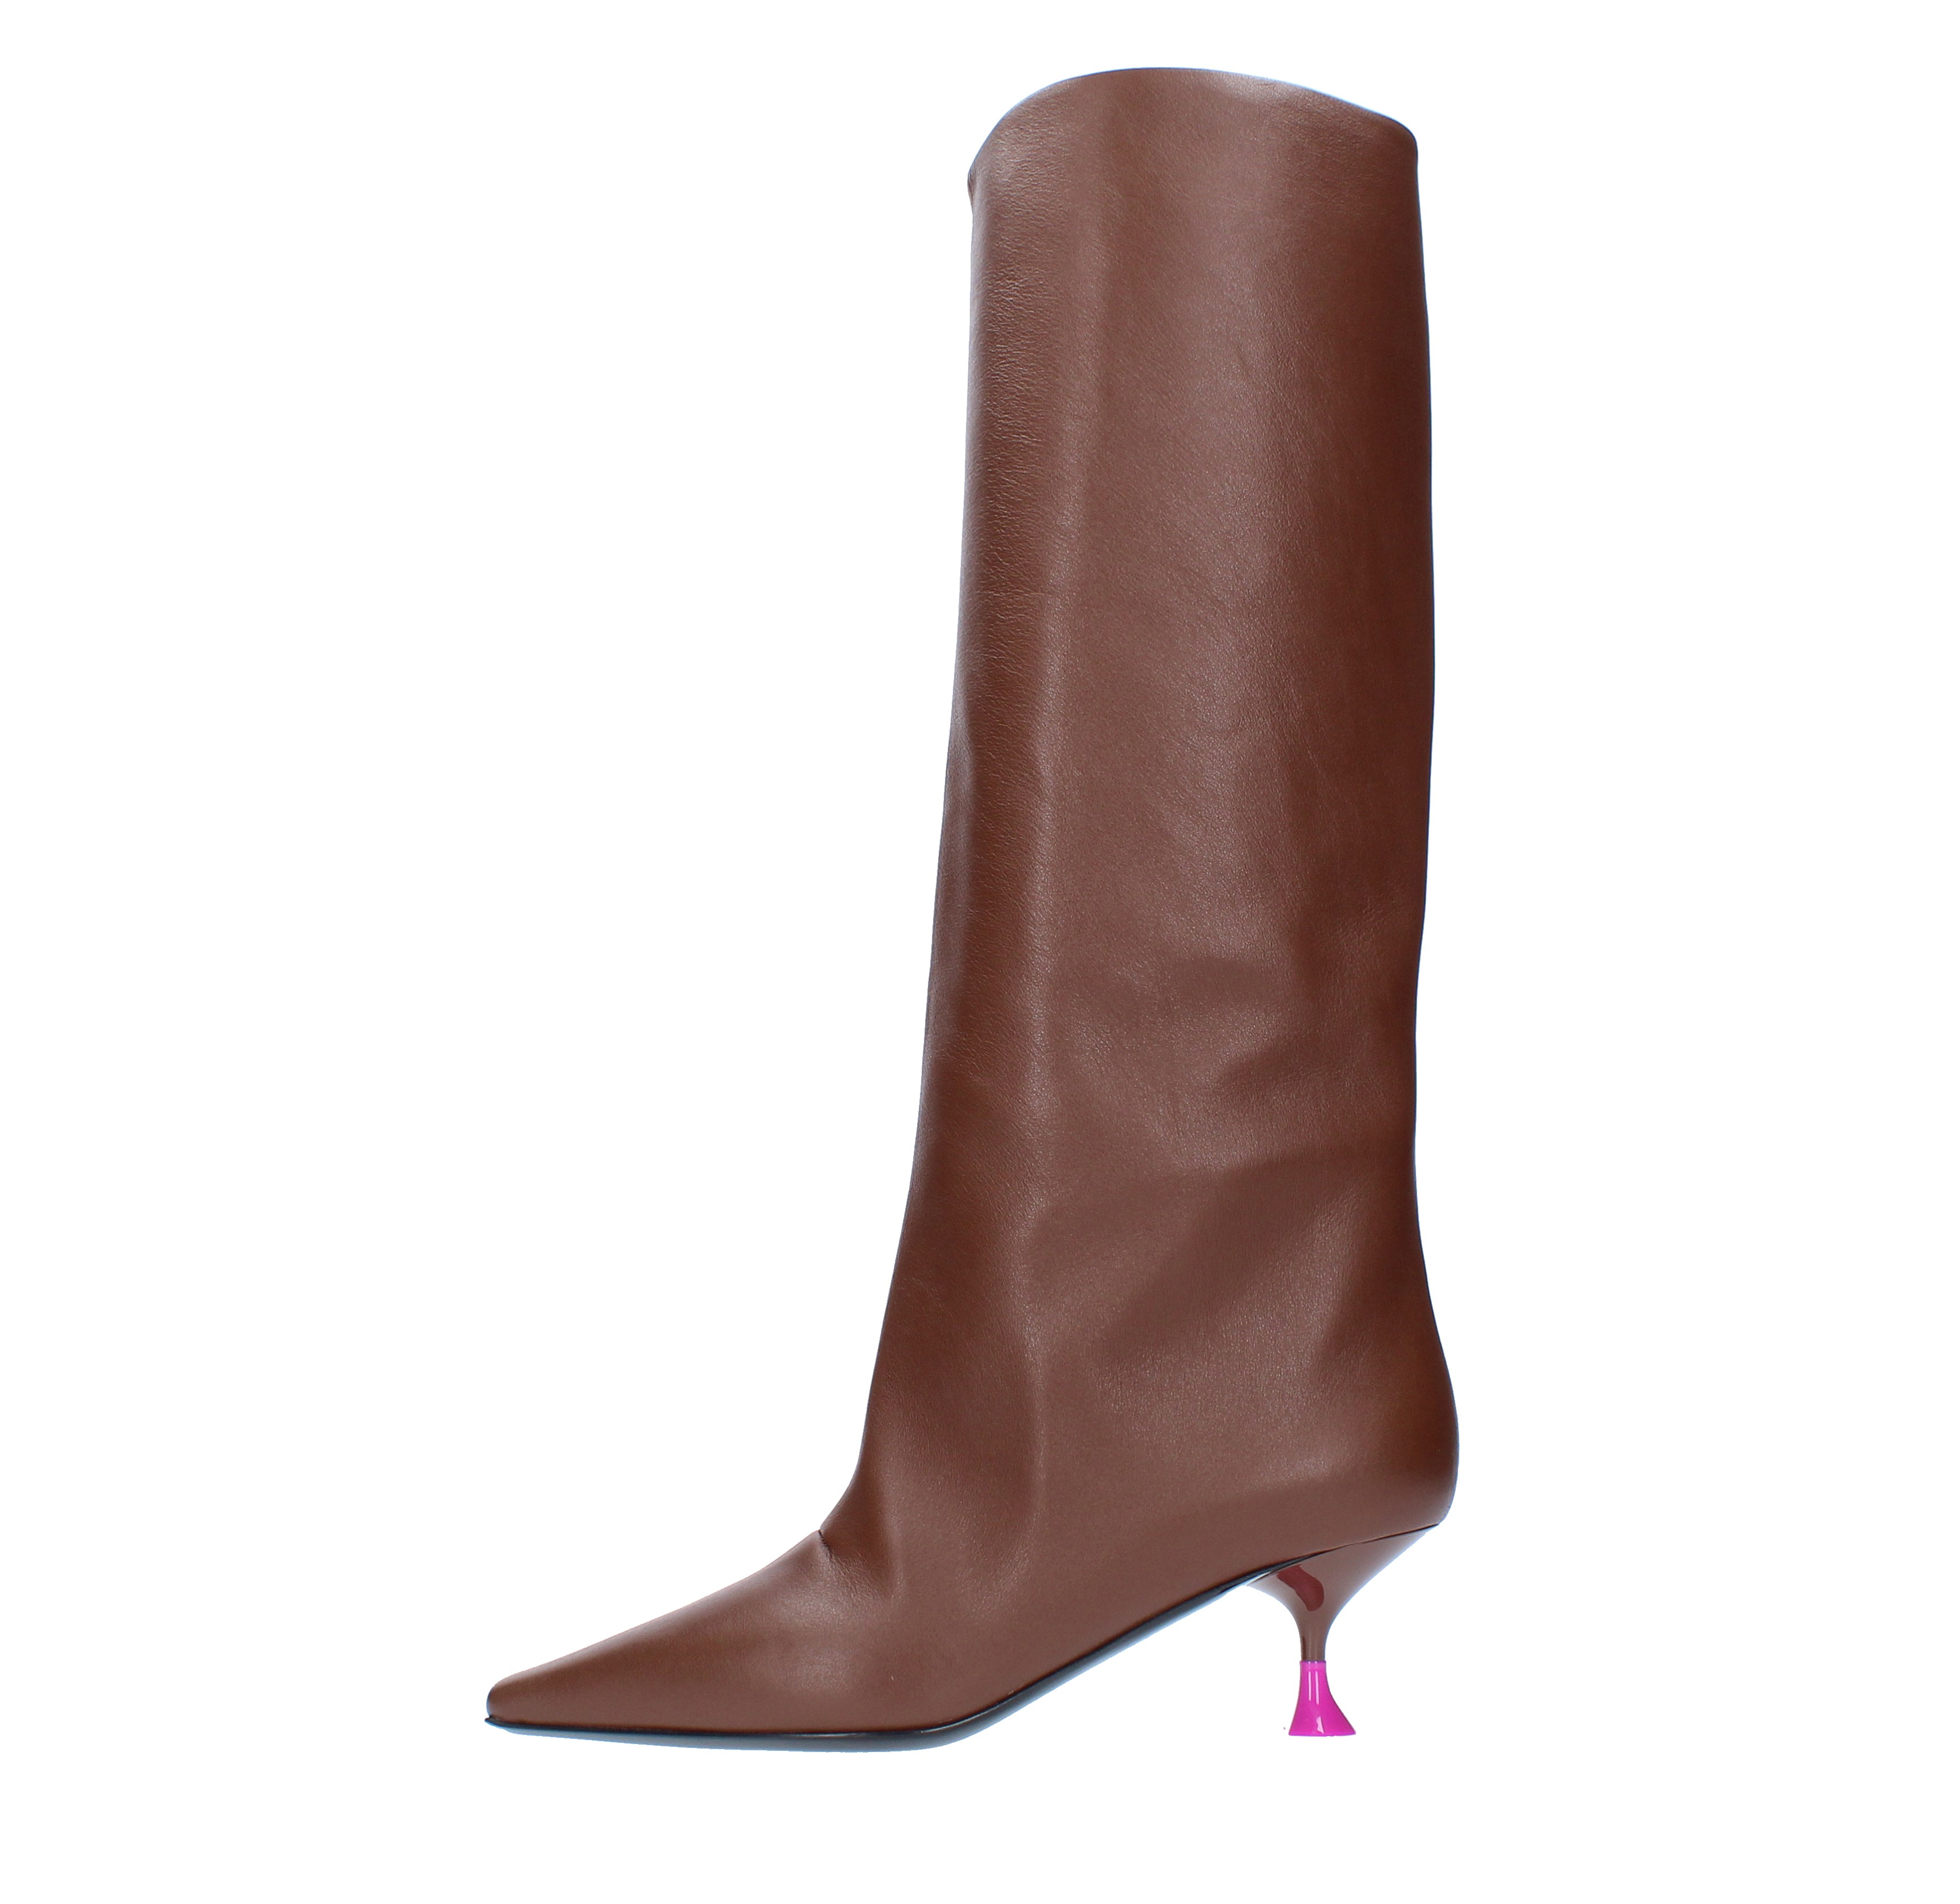 ANITA 3JUIN leather boots - 3JUIN - Ginevra calzature